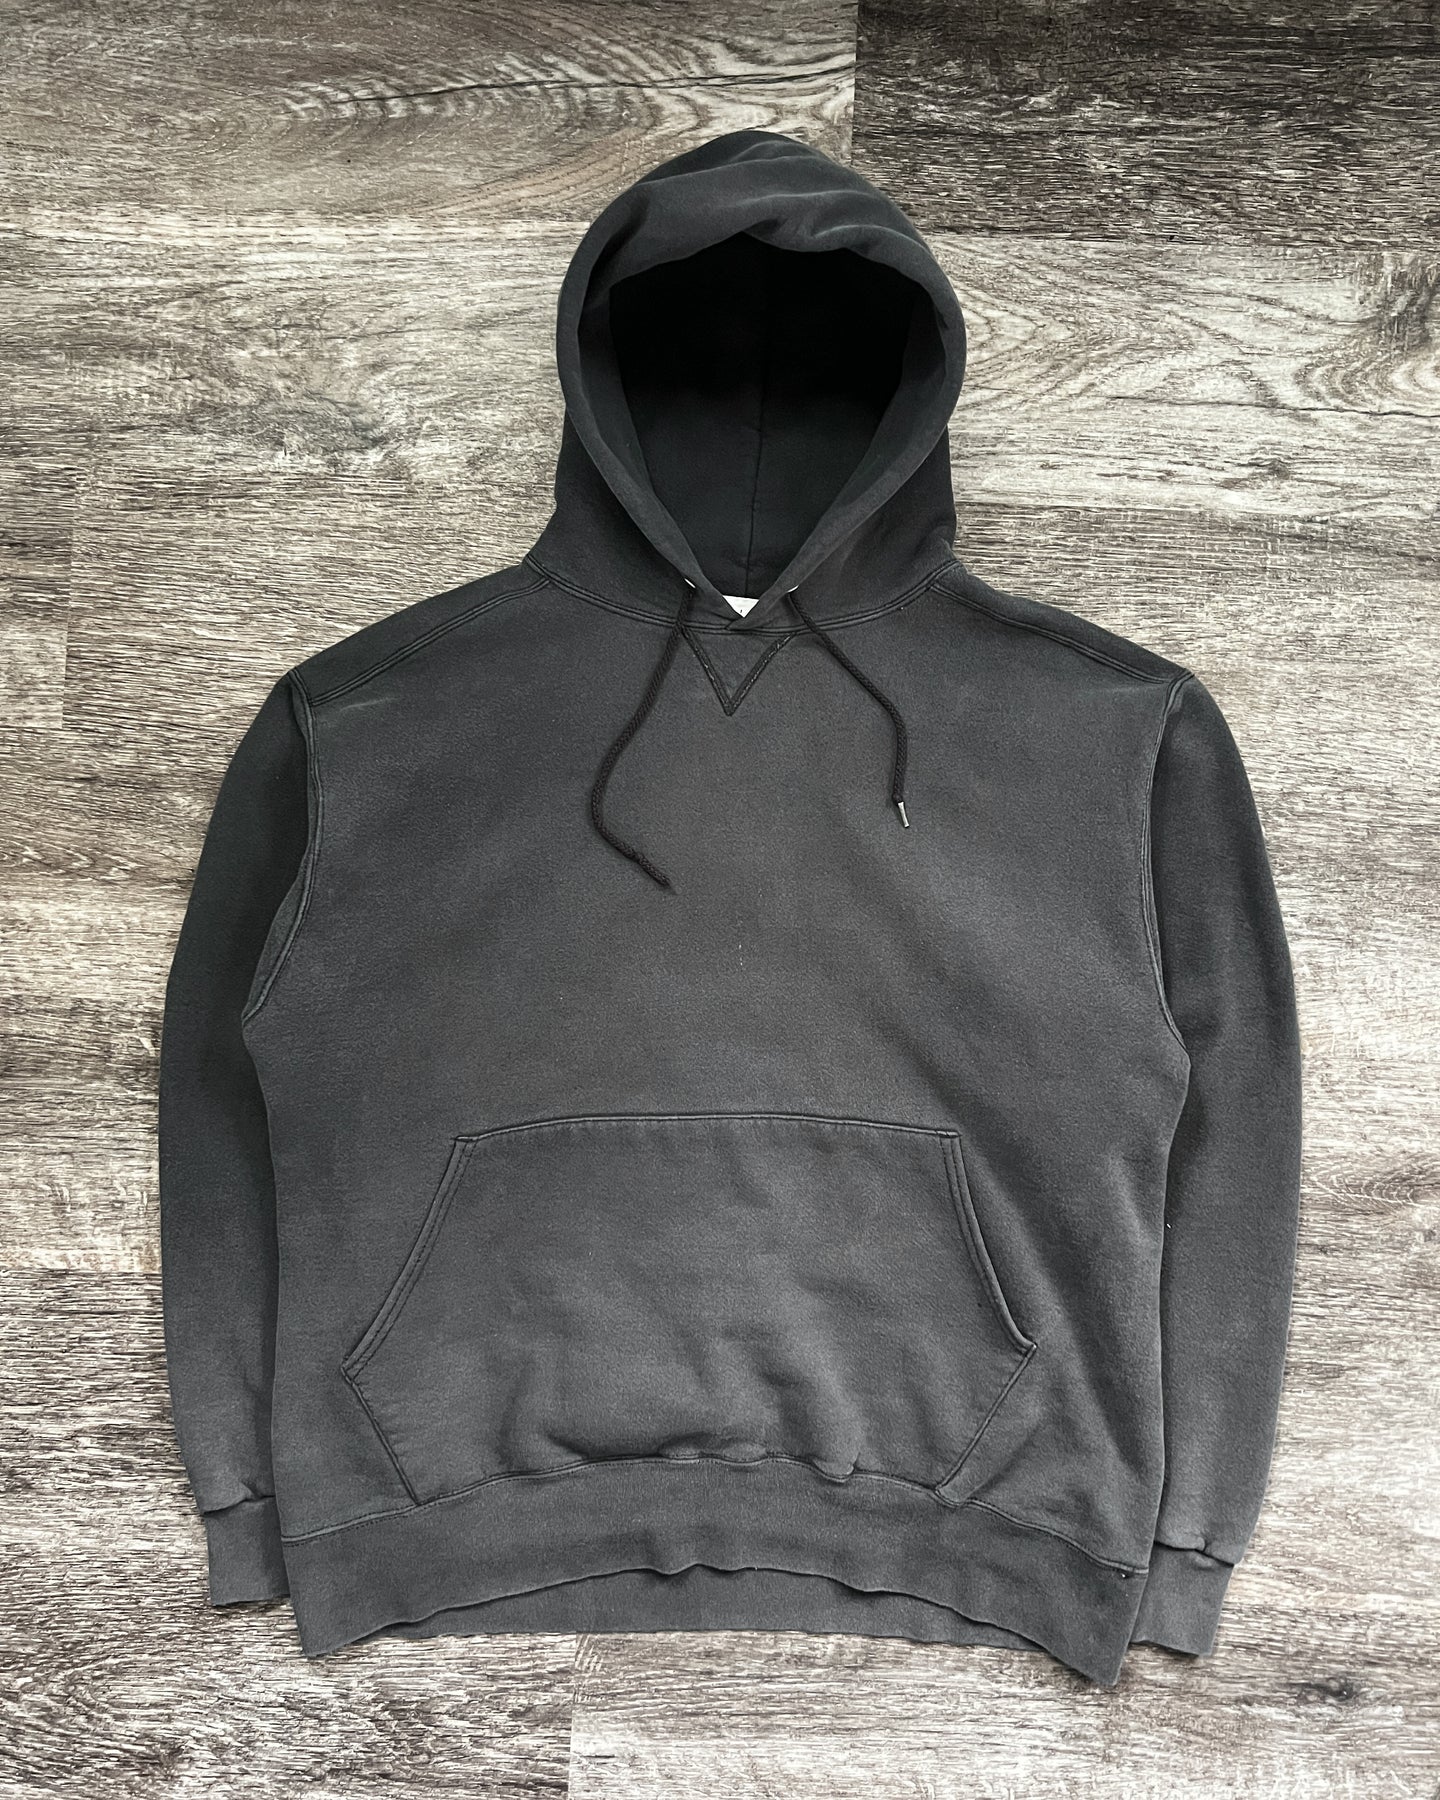 1990s Faded Black Hoodie Sweatshirt - Size X-Large